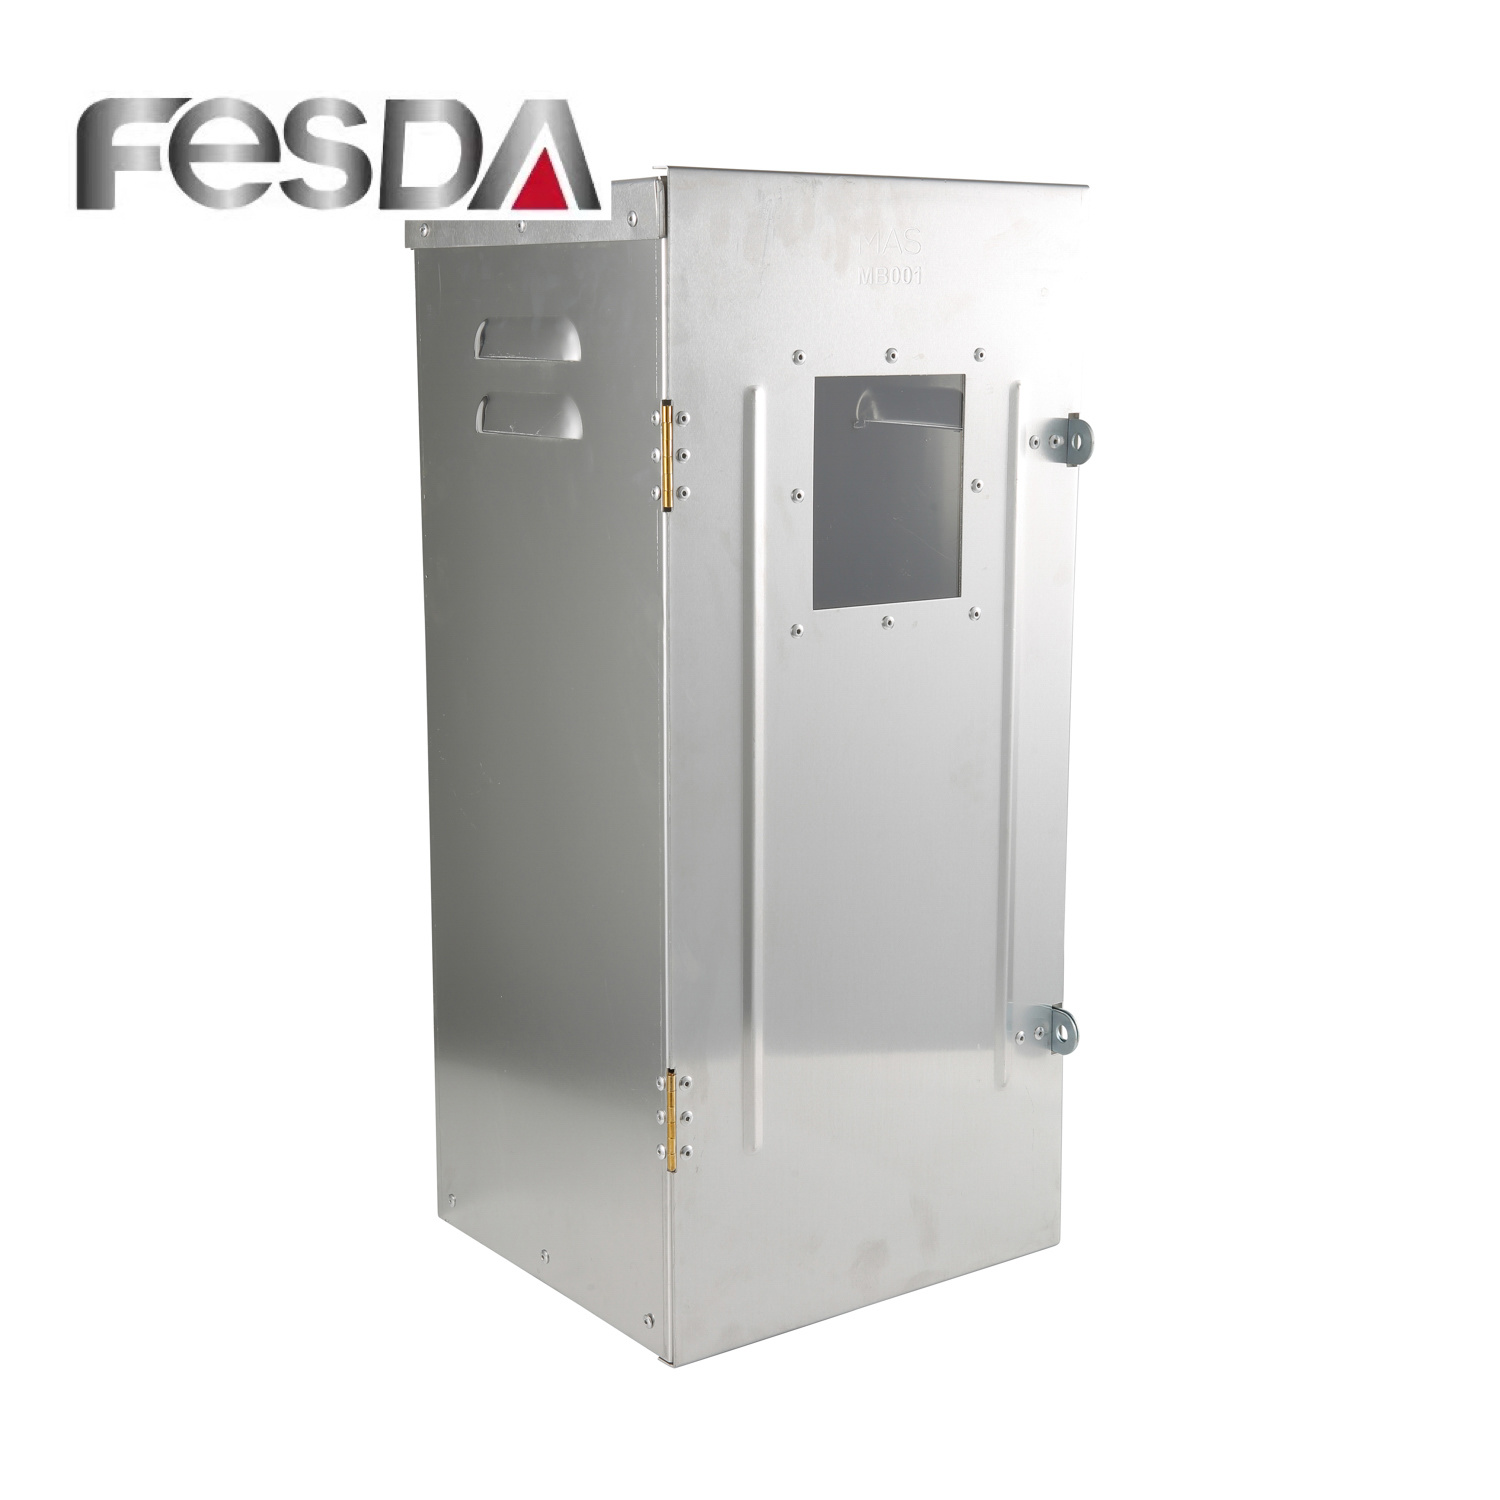 
                        Fesda safety Control Aluminum Electronic Power Box
                    